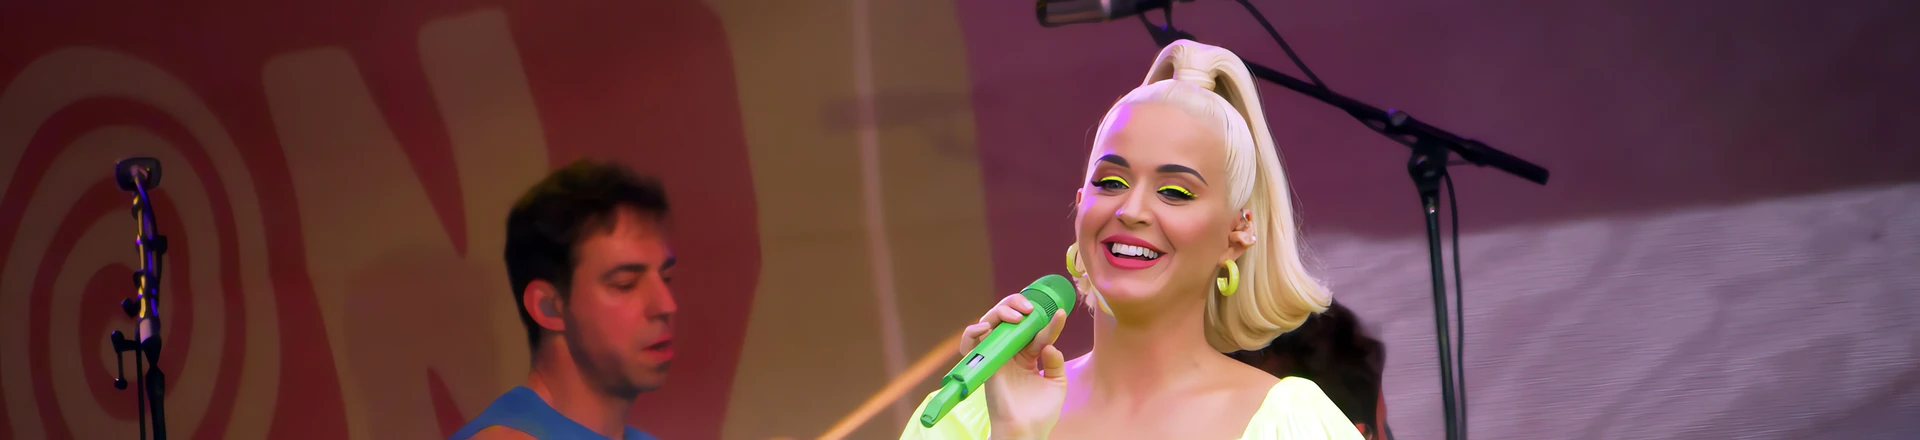 Koncert Katy Perry nagłośniony systemami liniowymi RCF HDL 20-A